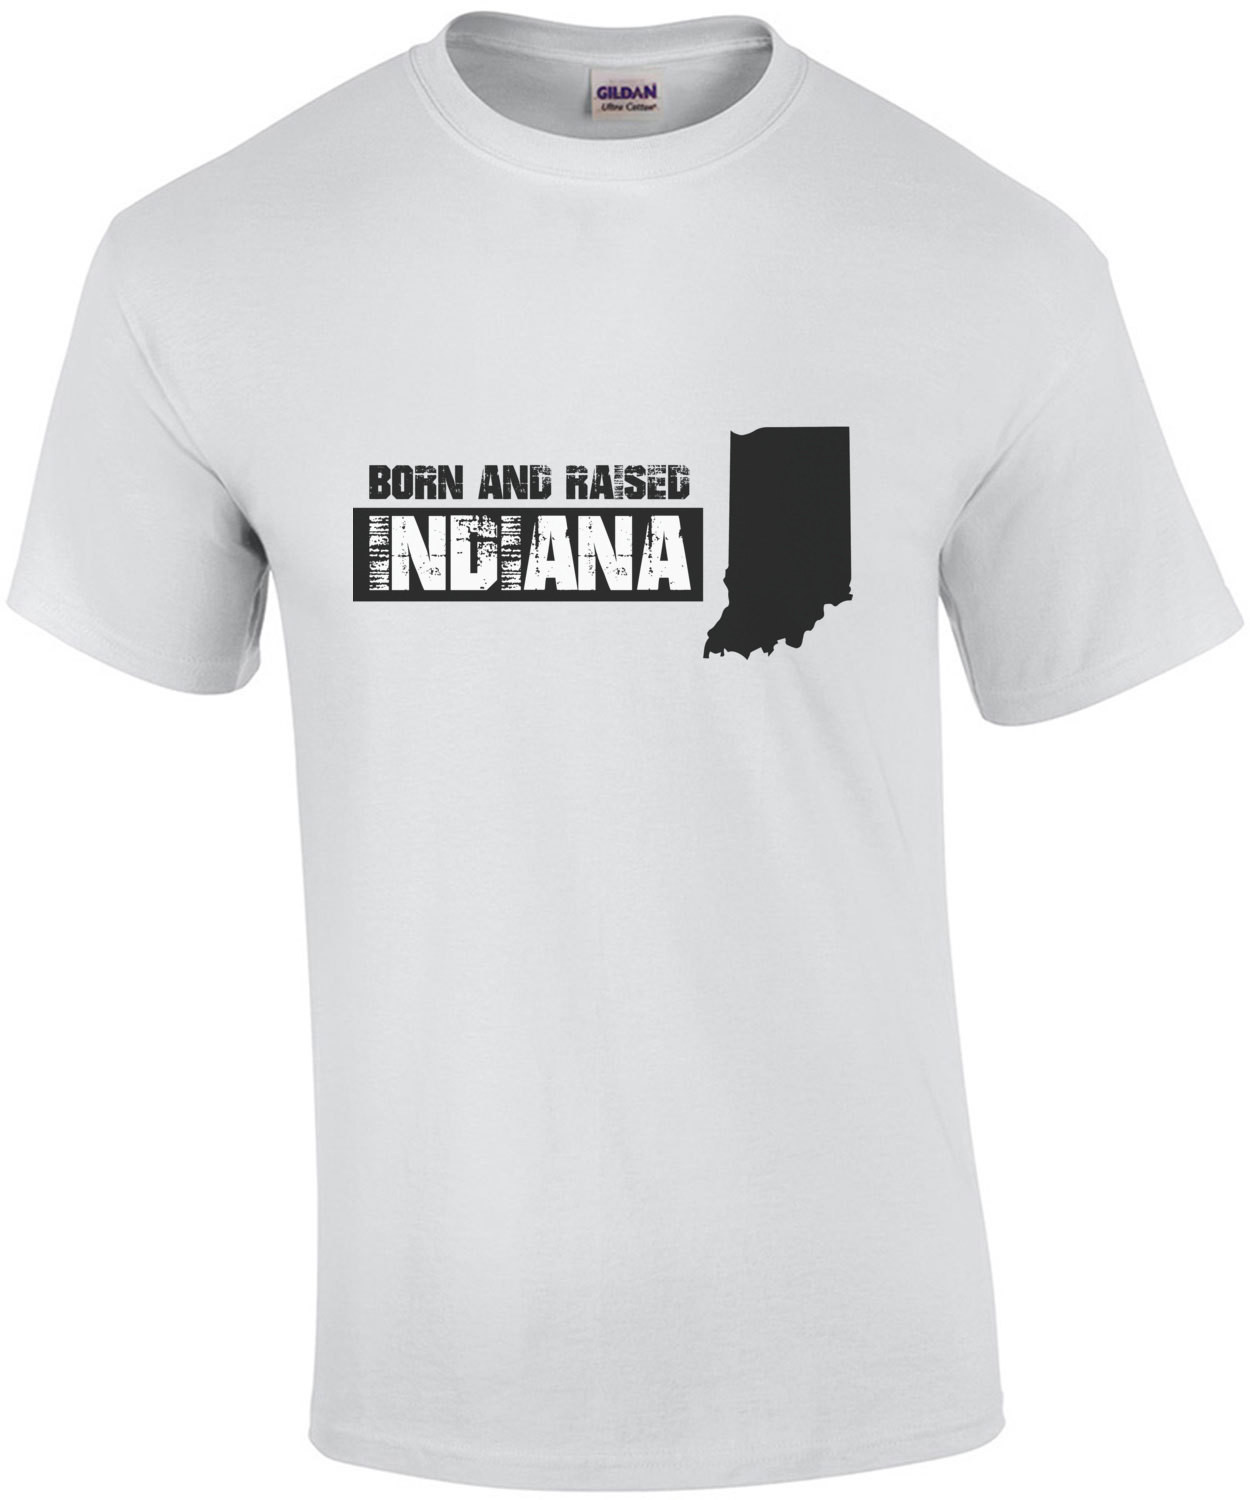 Born and raised Indiana - Indiana T-Shirt